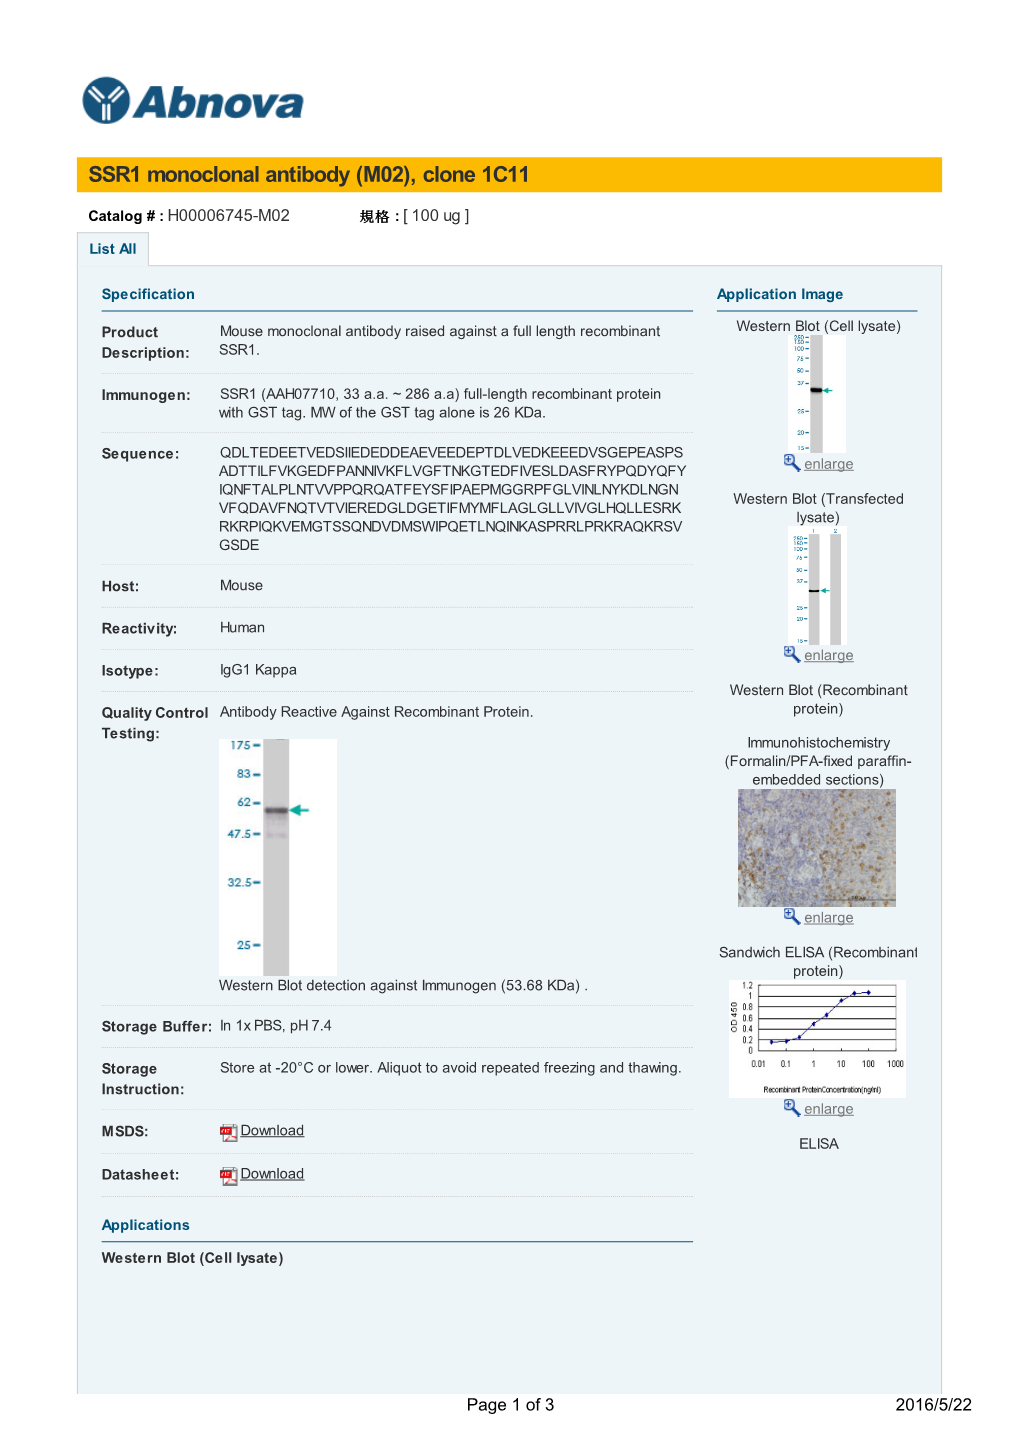 SSR1 Monoclonal Antibody (M02), Clone 1C11